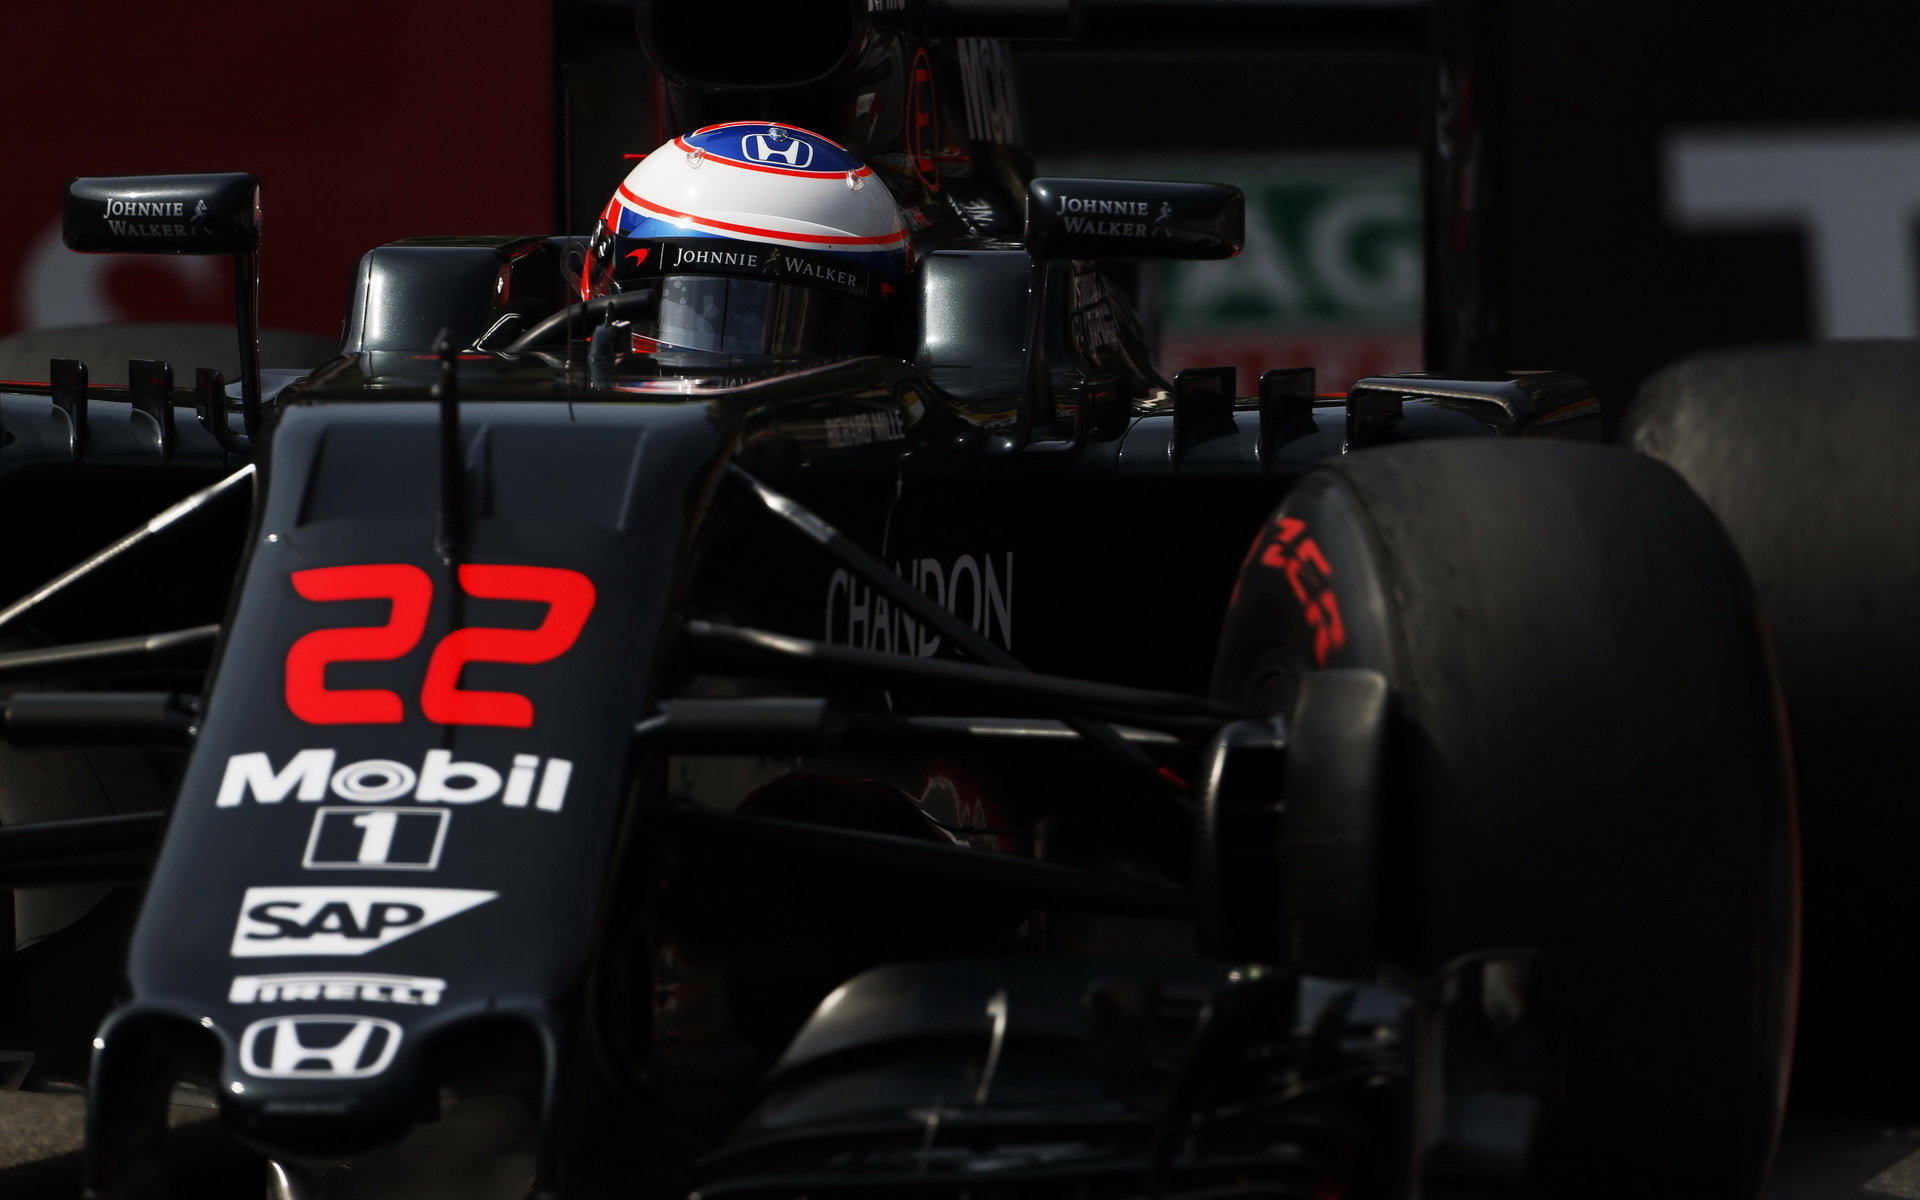 Jenson Button při kvalifikaci v Monaku